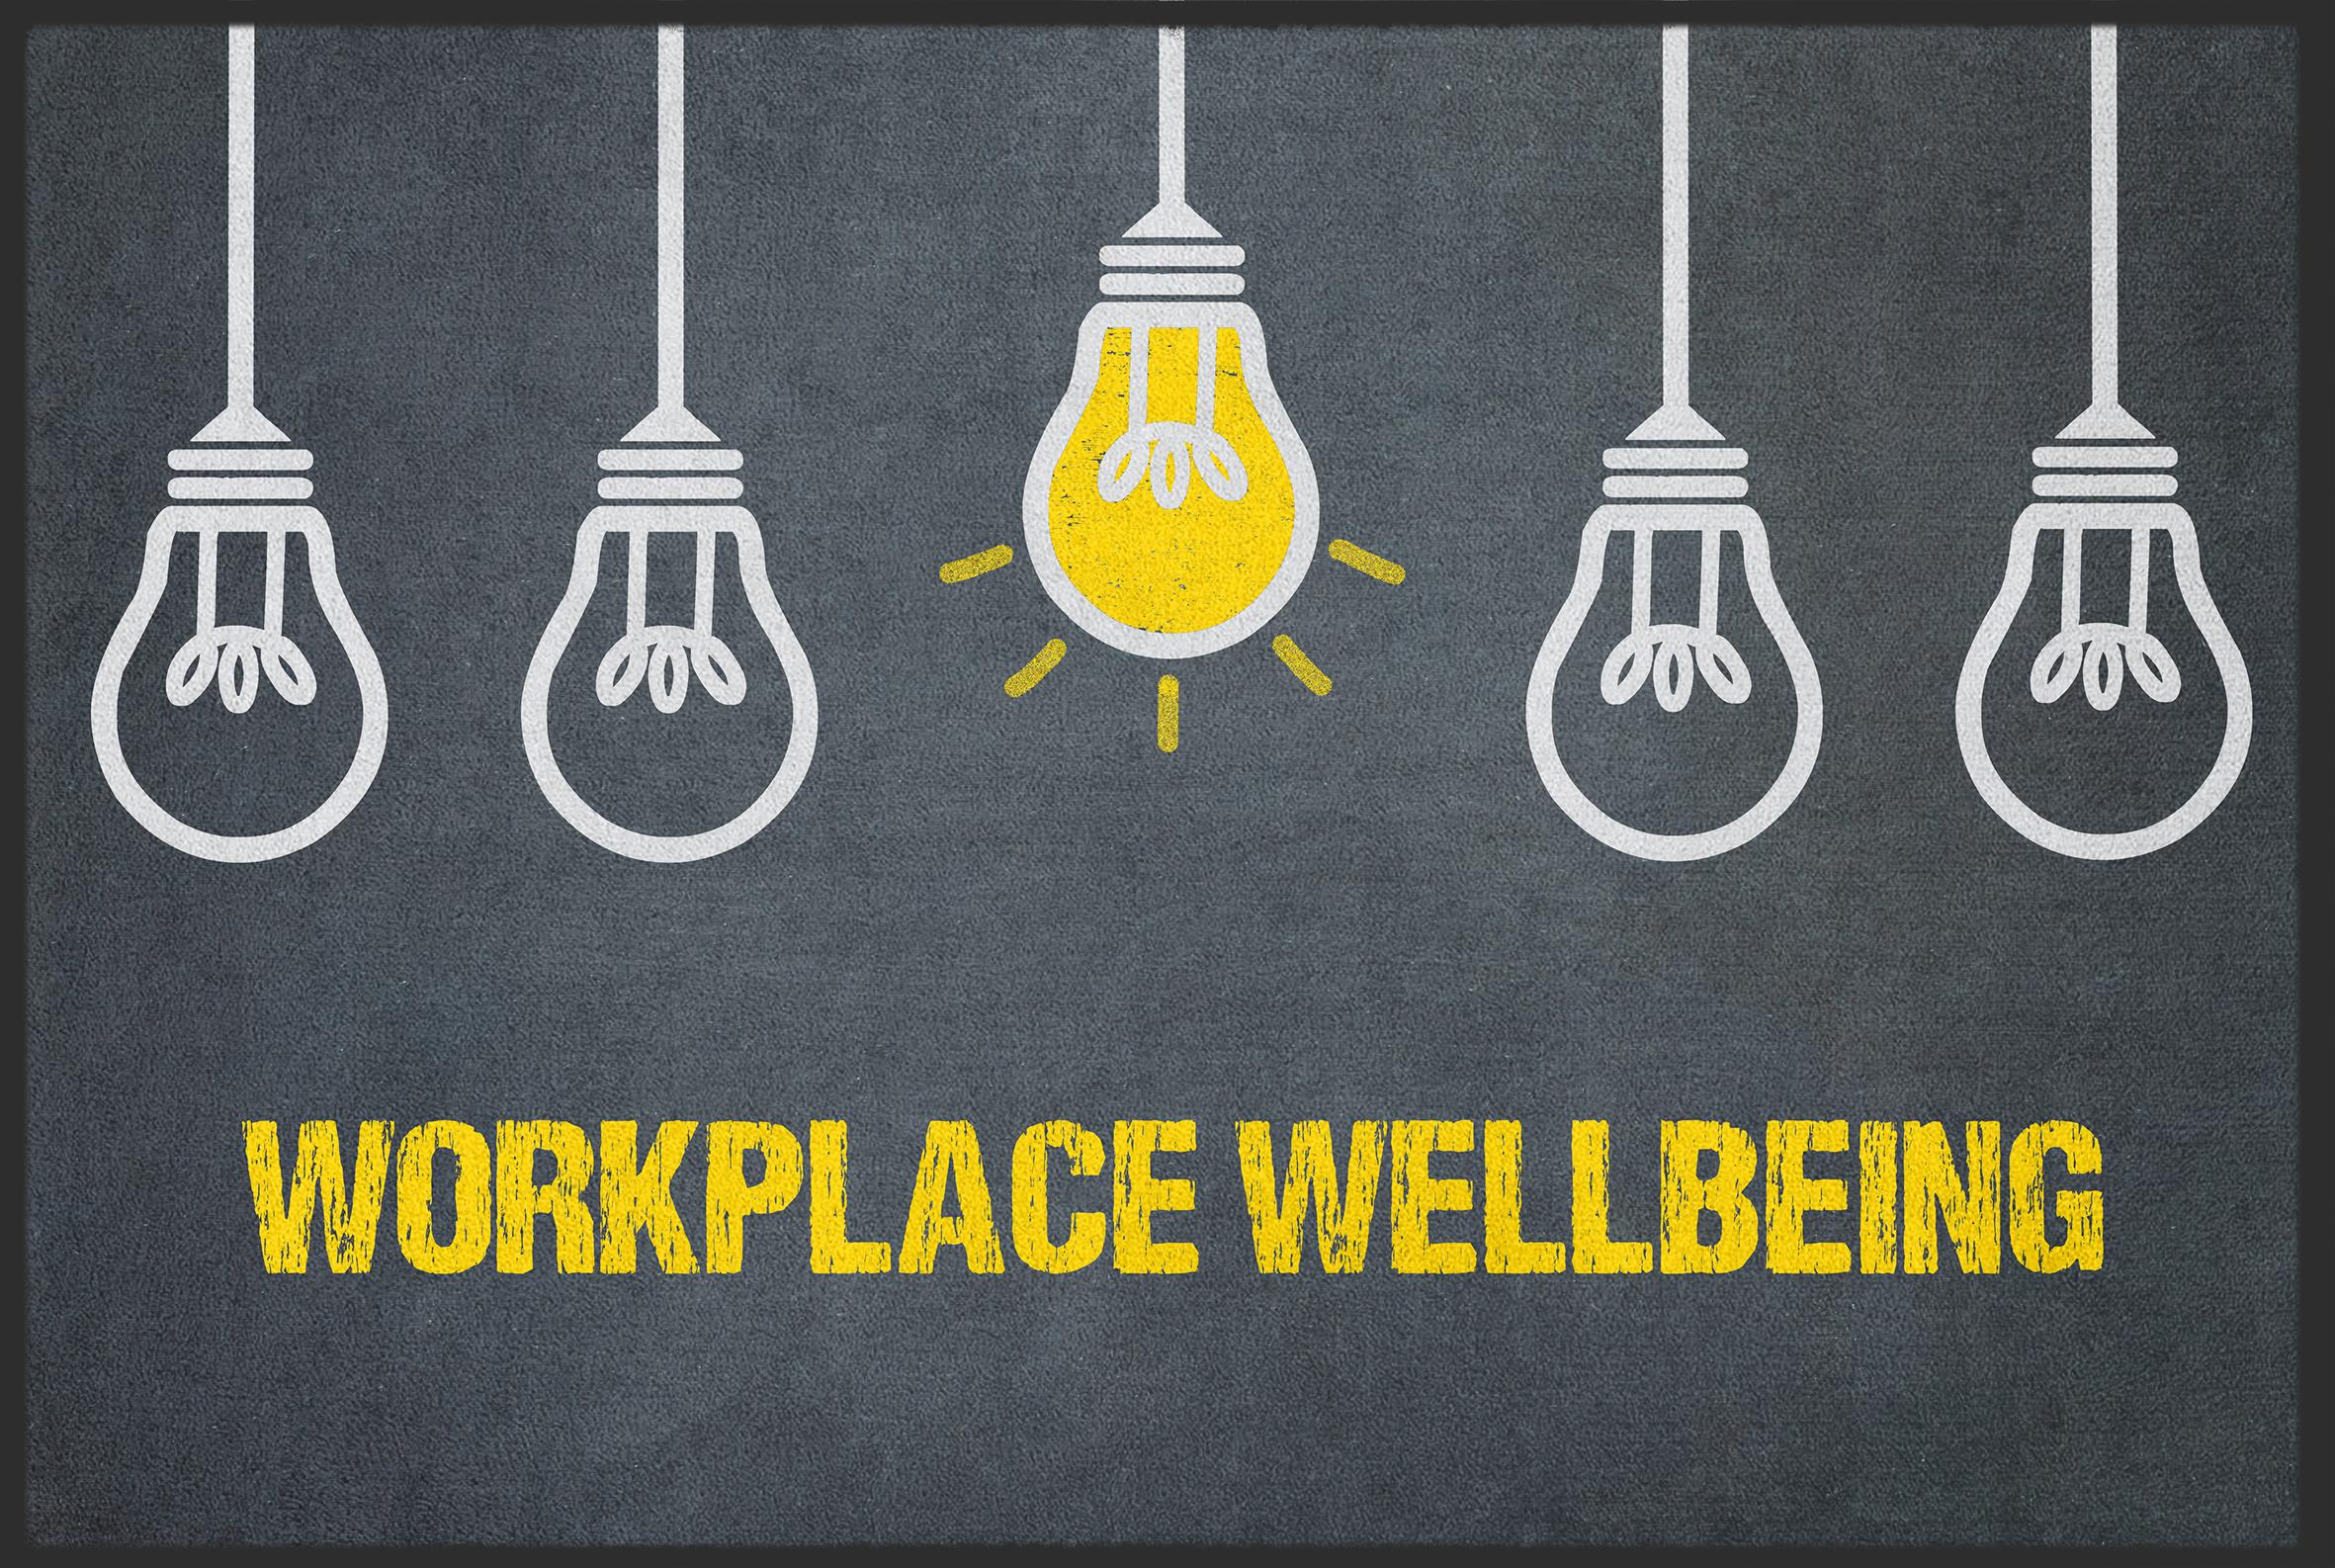 Fussmatte Workplace Wellbeing 10278-Matten-Welt